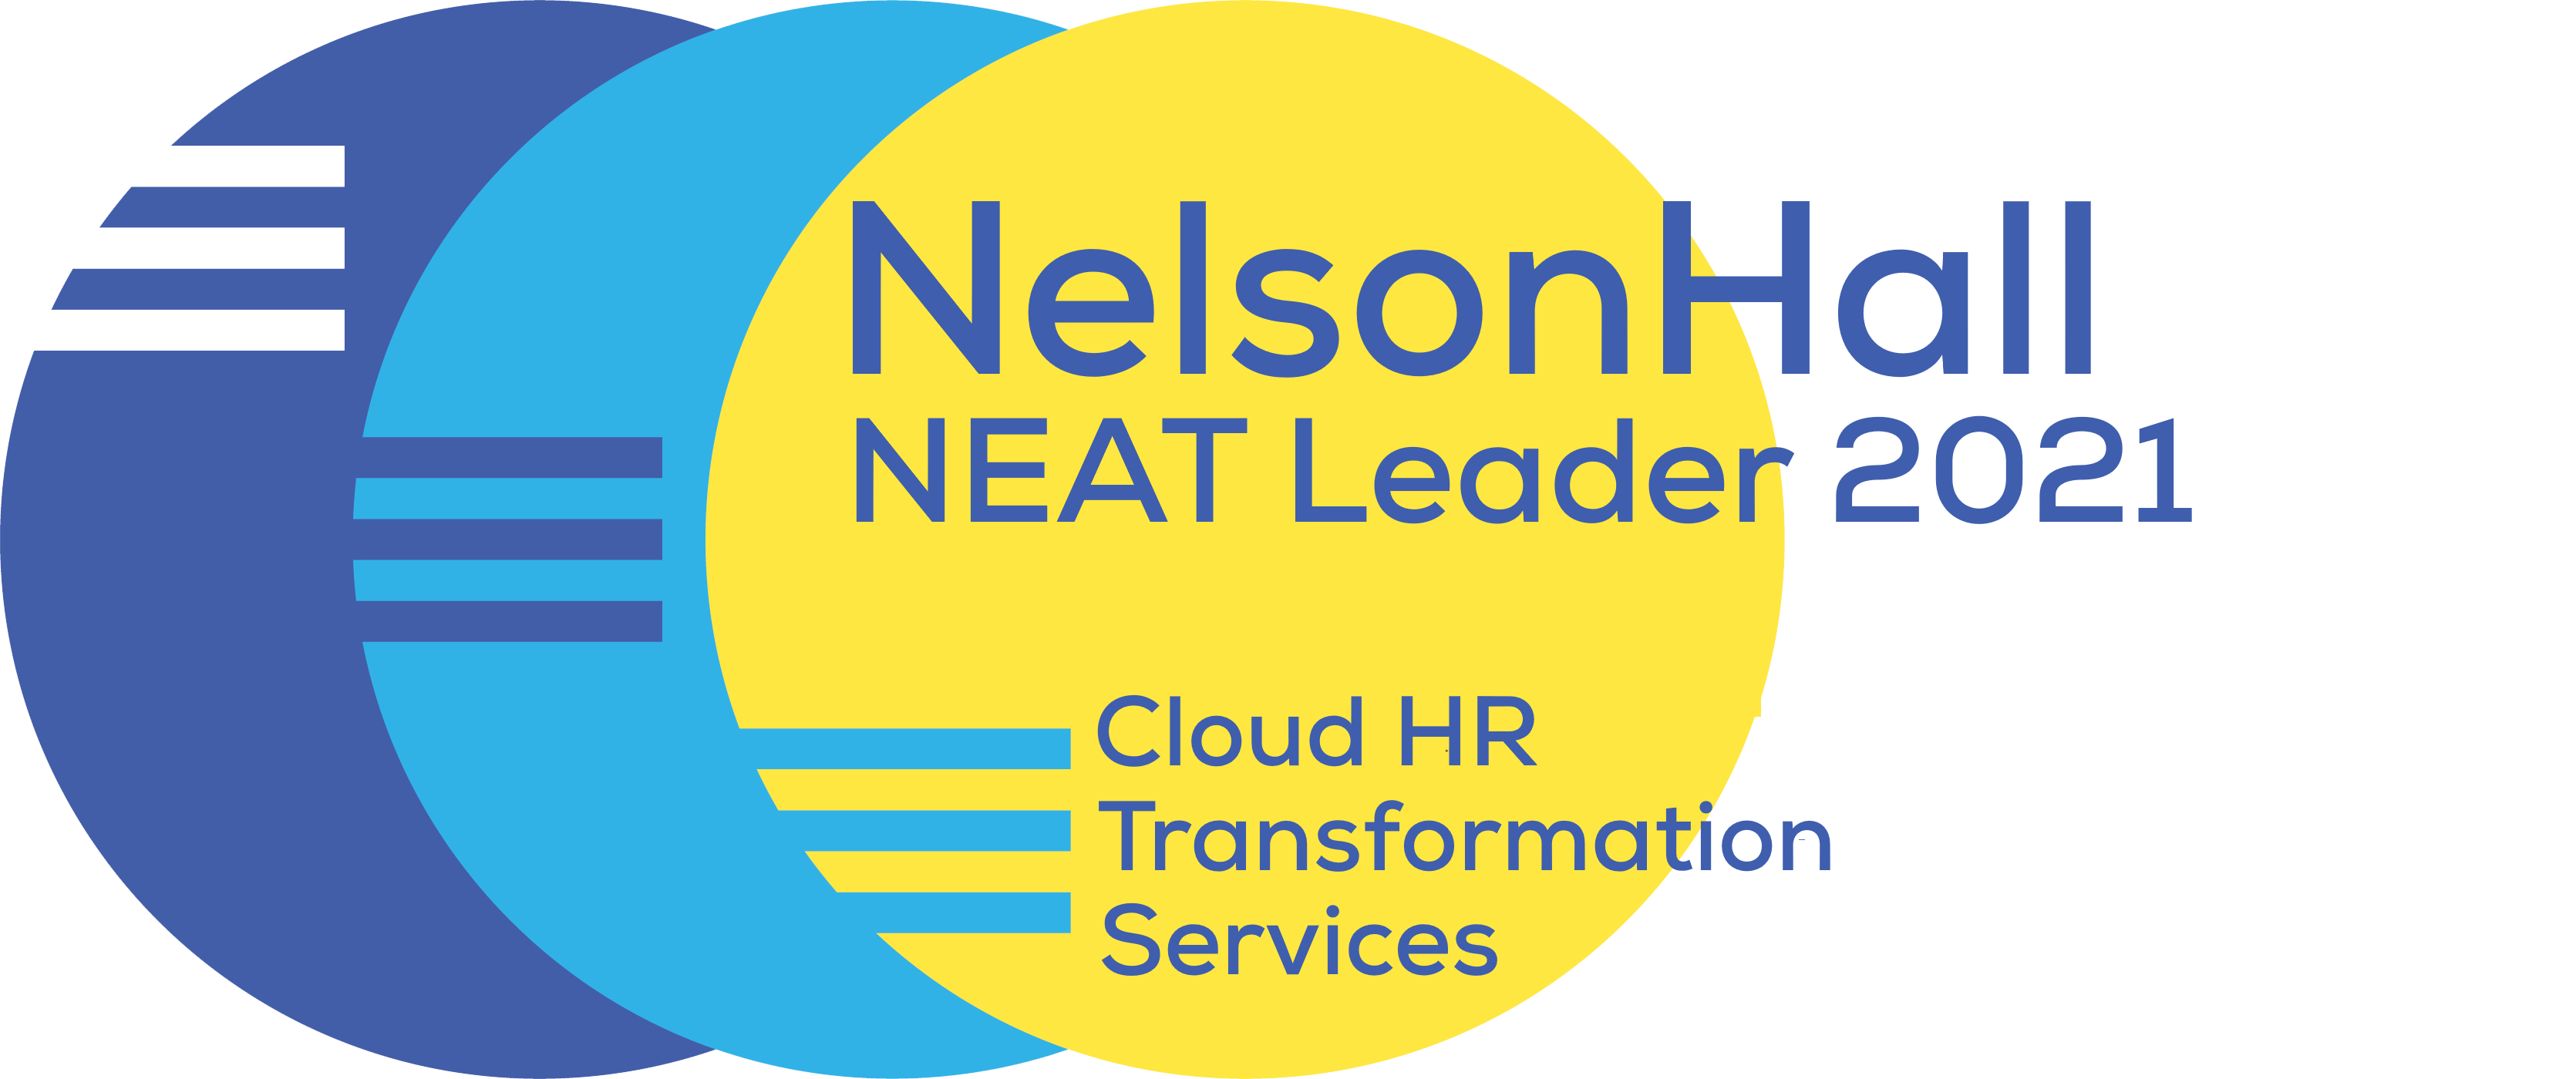 NelsonHall recognizes Capgemini’s Cloud HR transformation expertise Badge